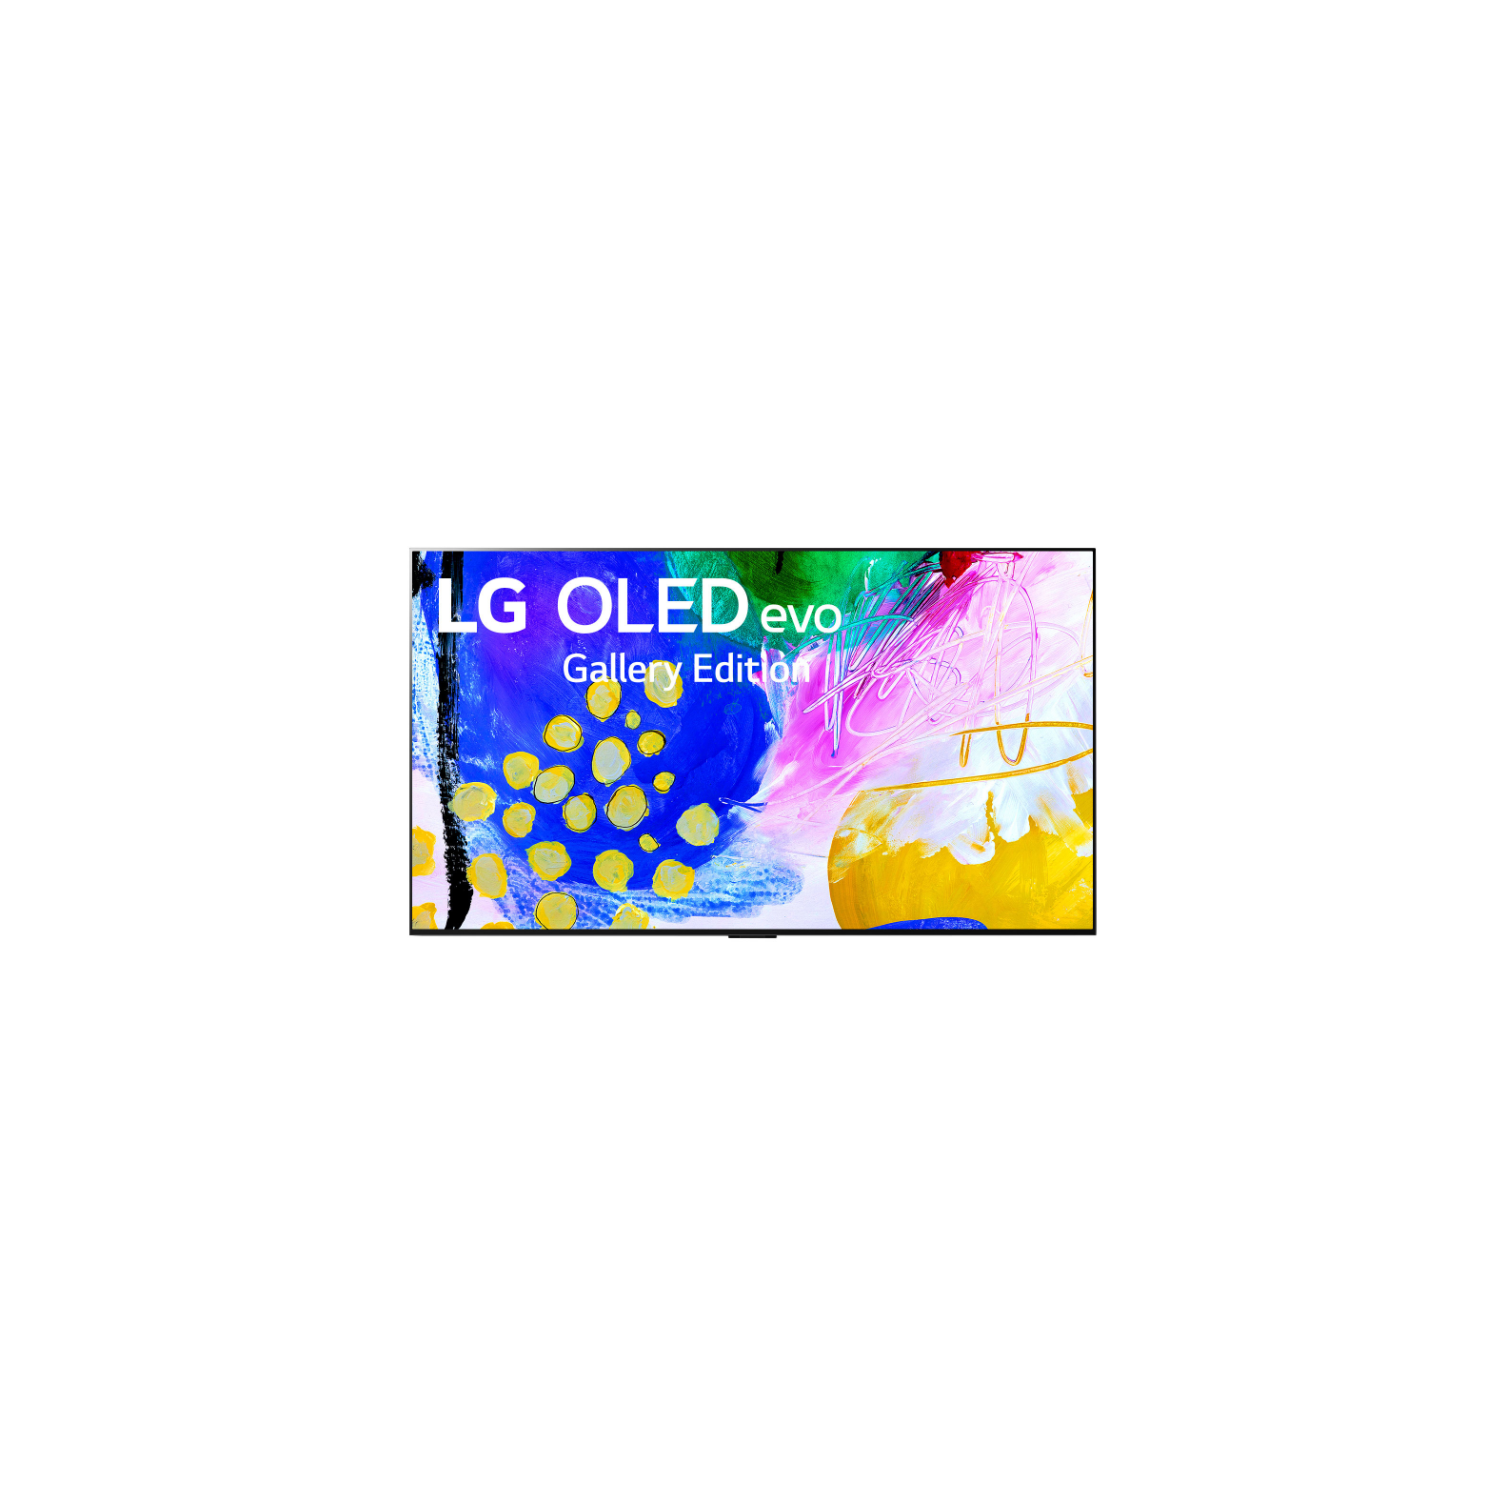 Refurbished (Good) LG OLED77G2PUA 77" G2 4K UHD HDR OLED webOS Evo Gallery Smart TV - Satin Silver